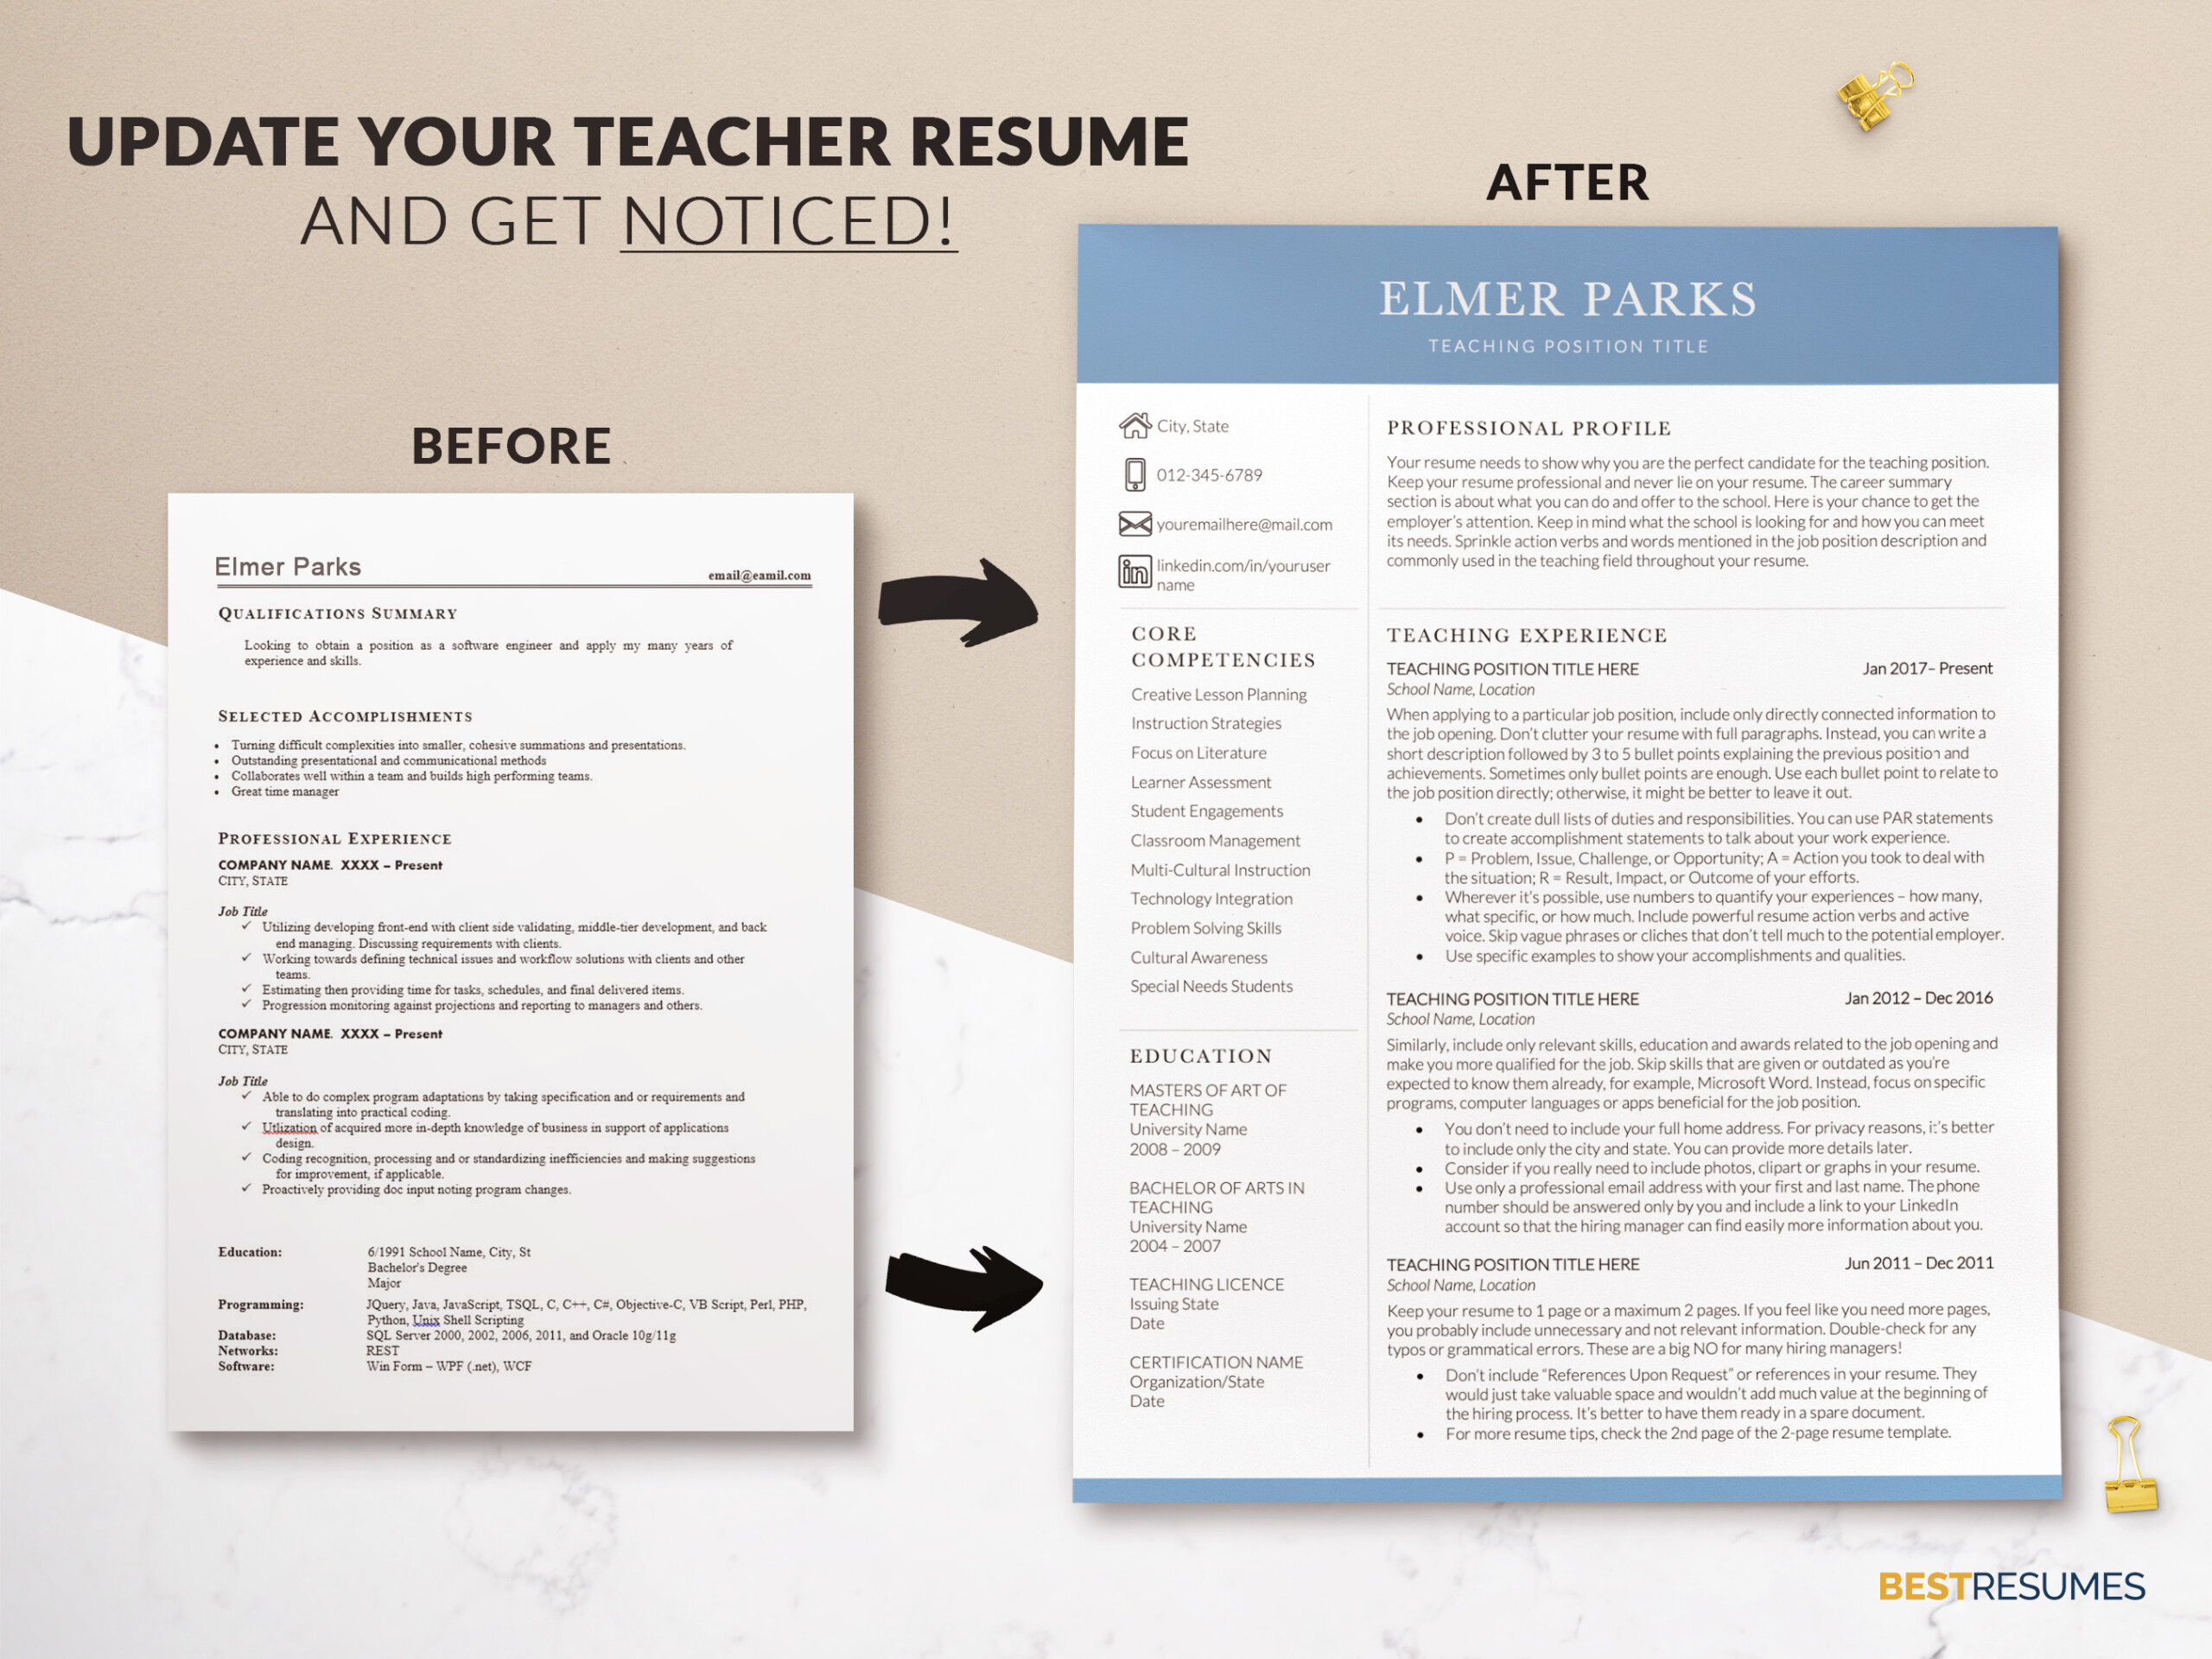 Professional Teacher Resume and Cover Letter Template Update Your Teacher Resume Elmer Parks